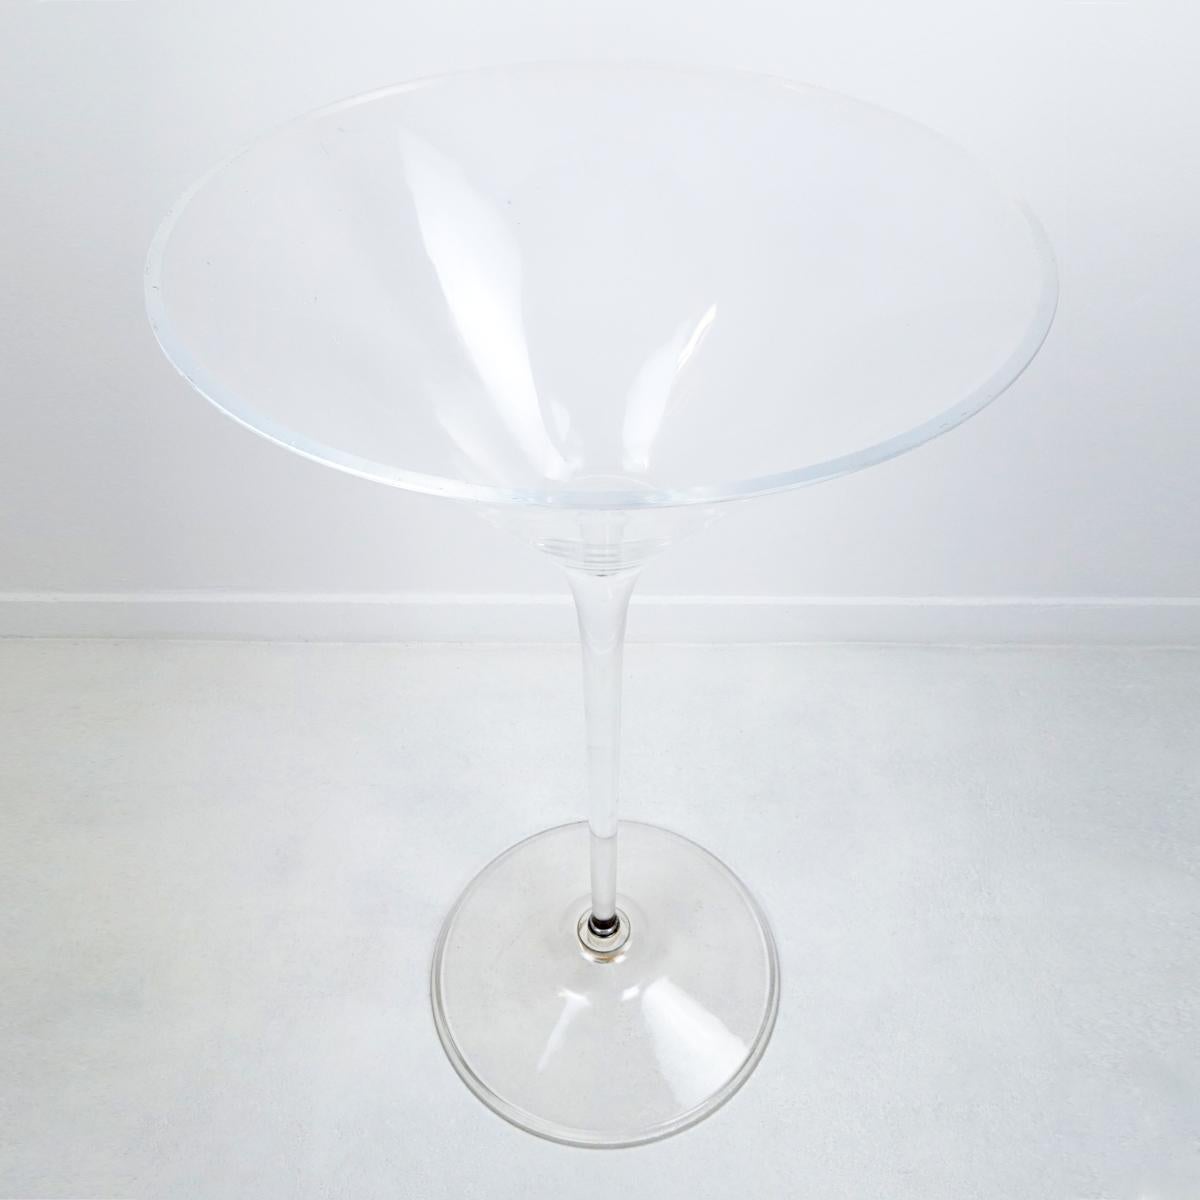 Dutch Larger Than Life Mid-Century Modern Cocktail Glass Made of Plexiglass